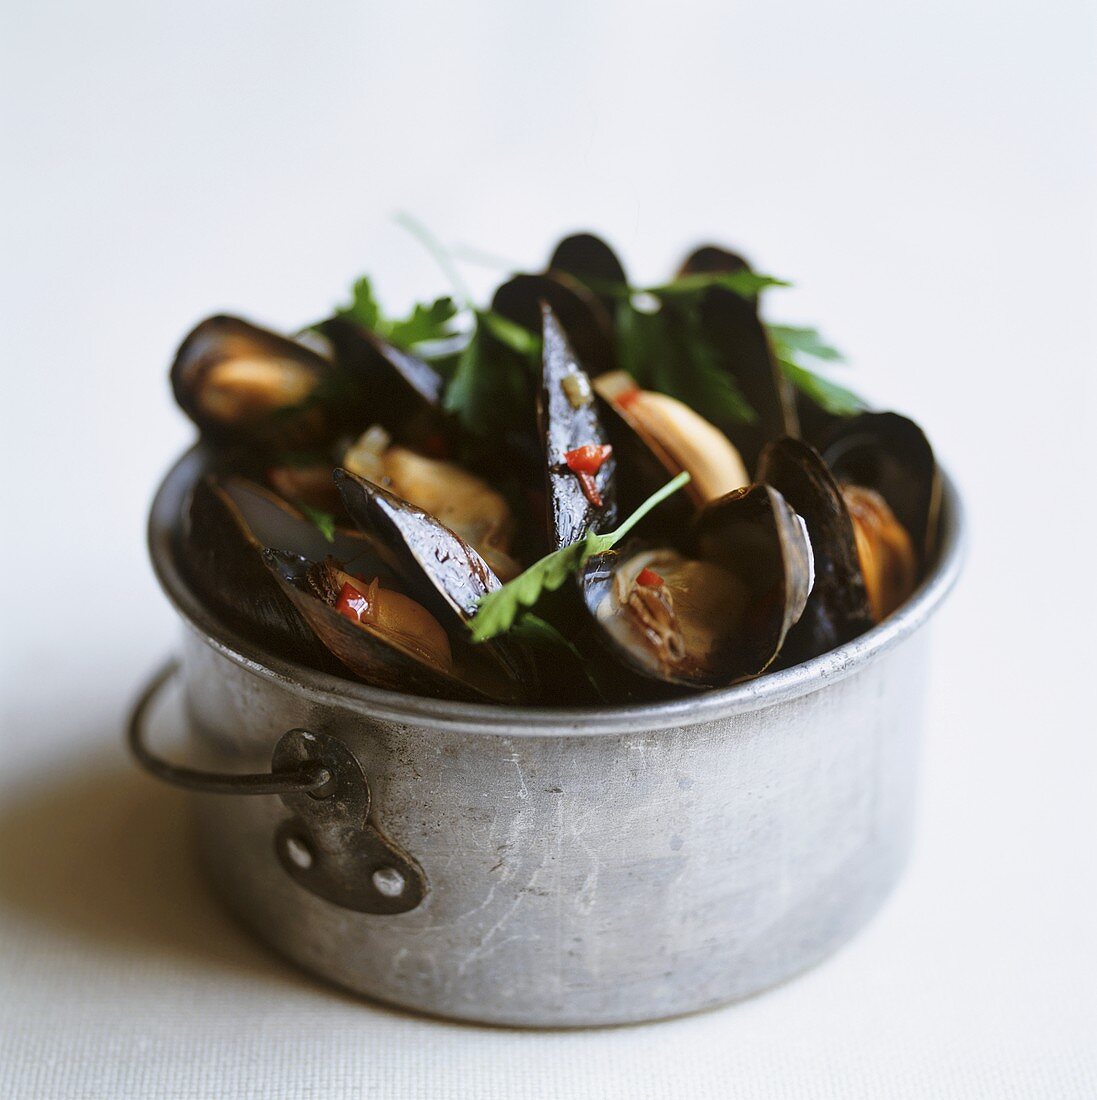 Mussels in pan